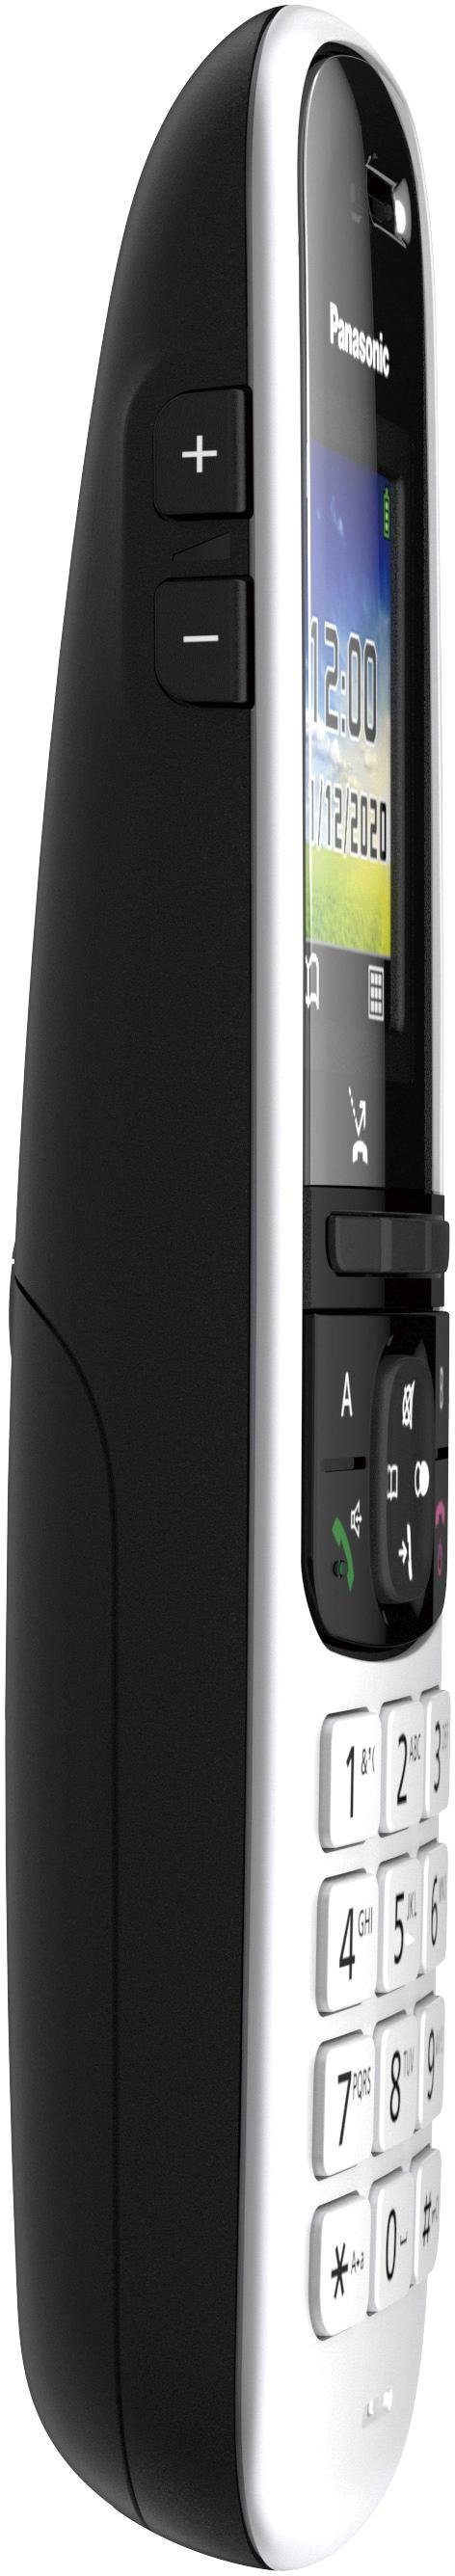 Panasonic KX-TGH710 DECT-Telefon (Mobilteile: Schnurloses 1) schwarz